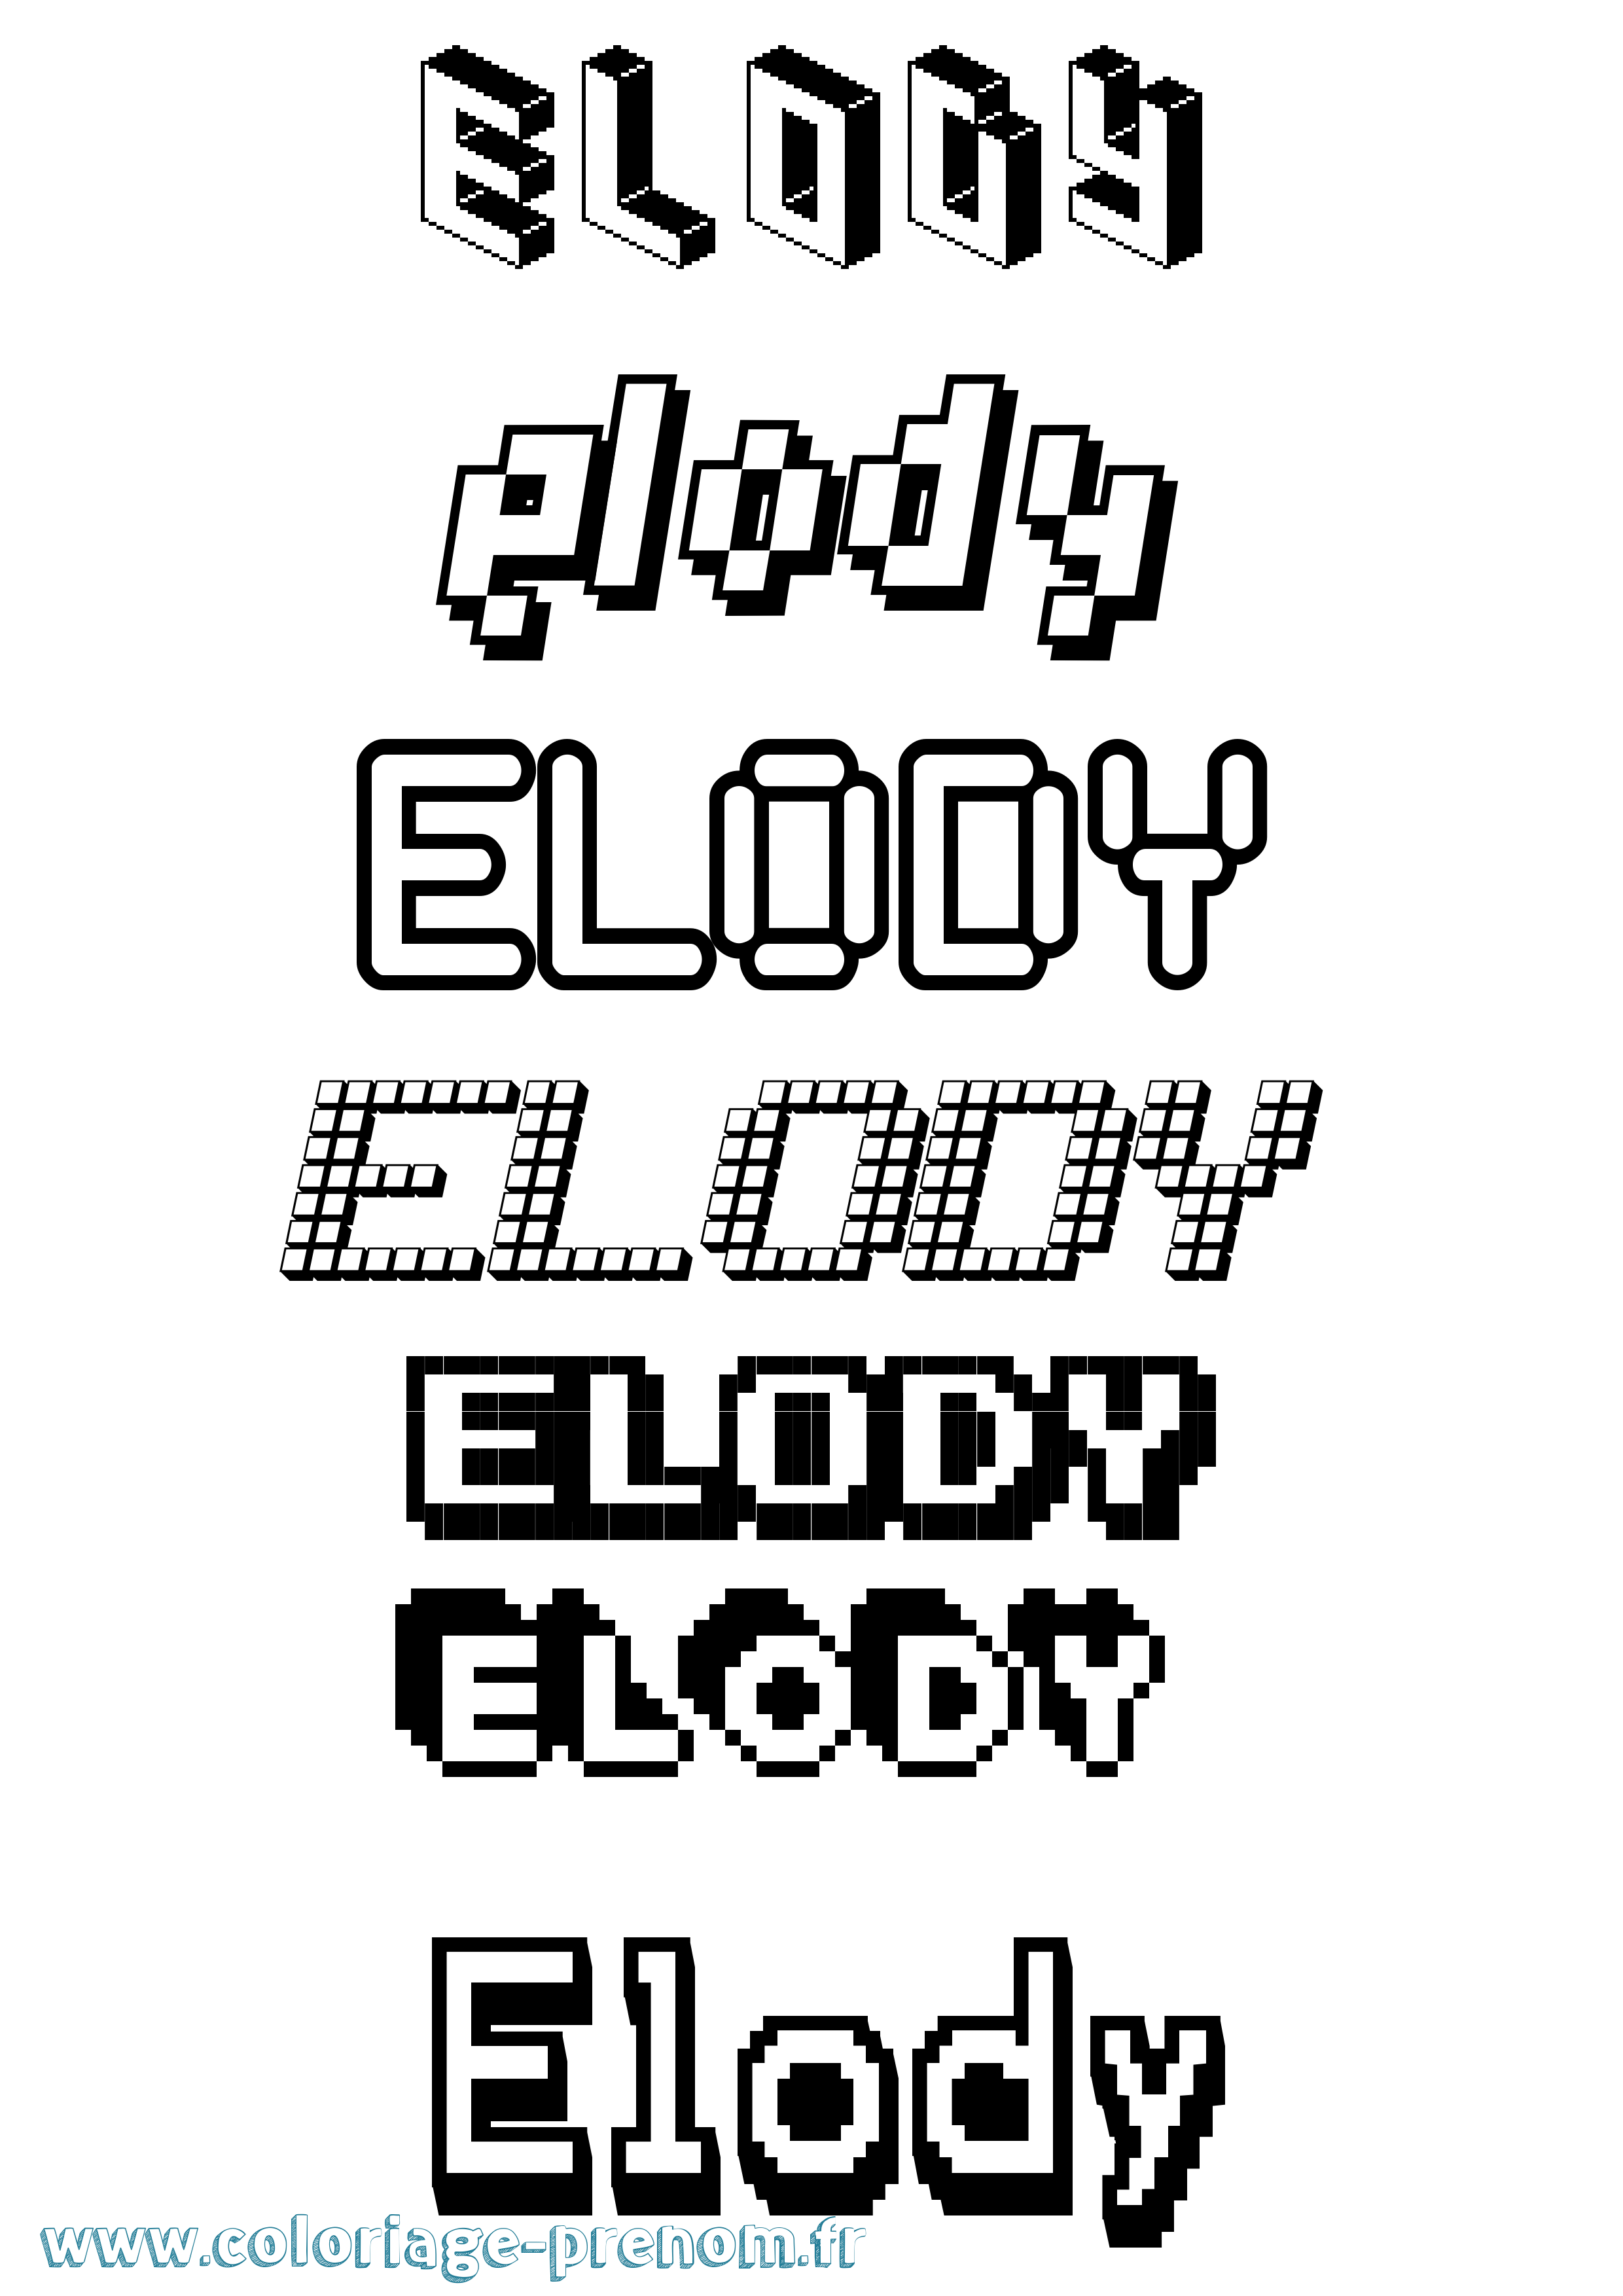 Coloriage prénom Elody Pixel